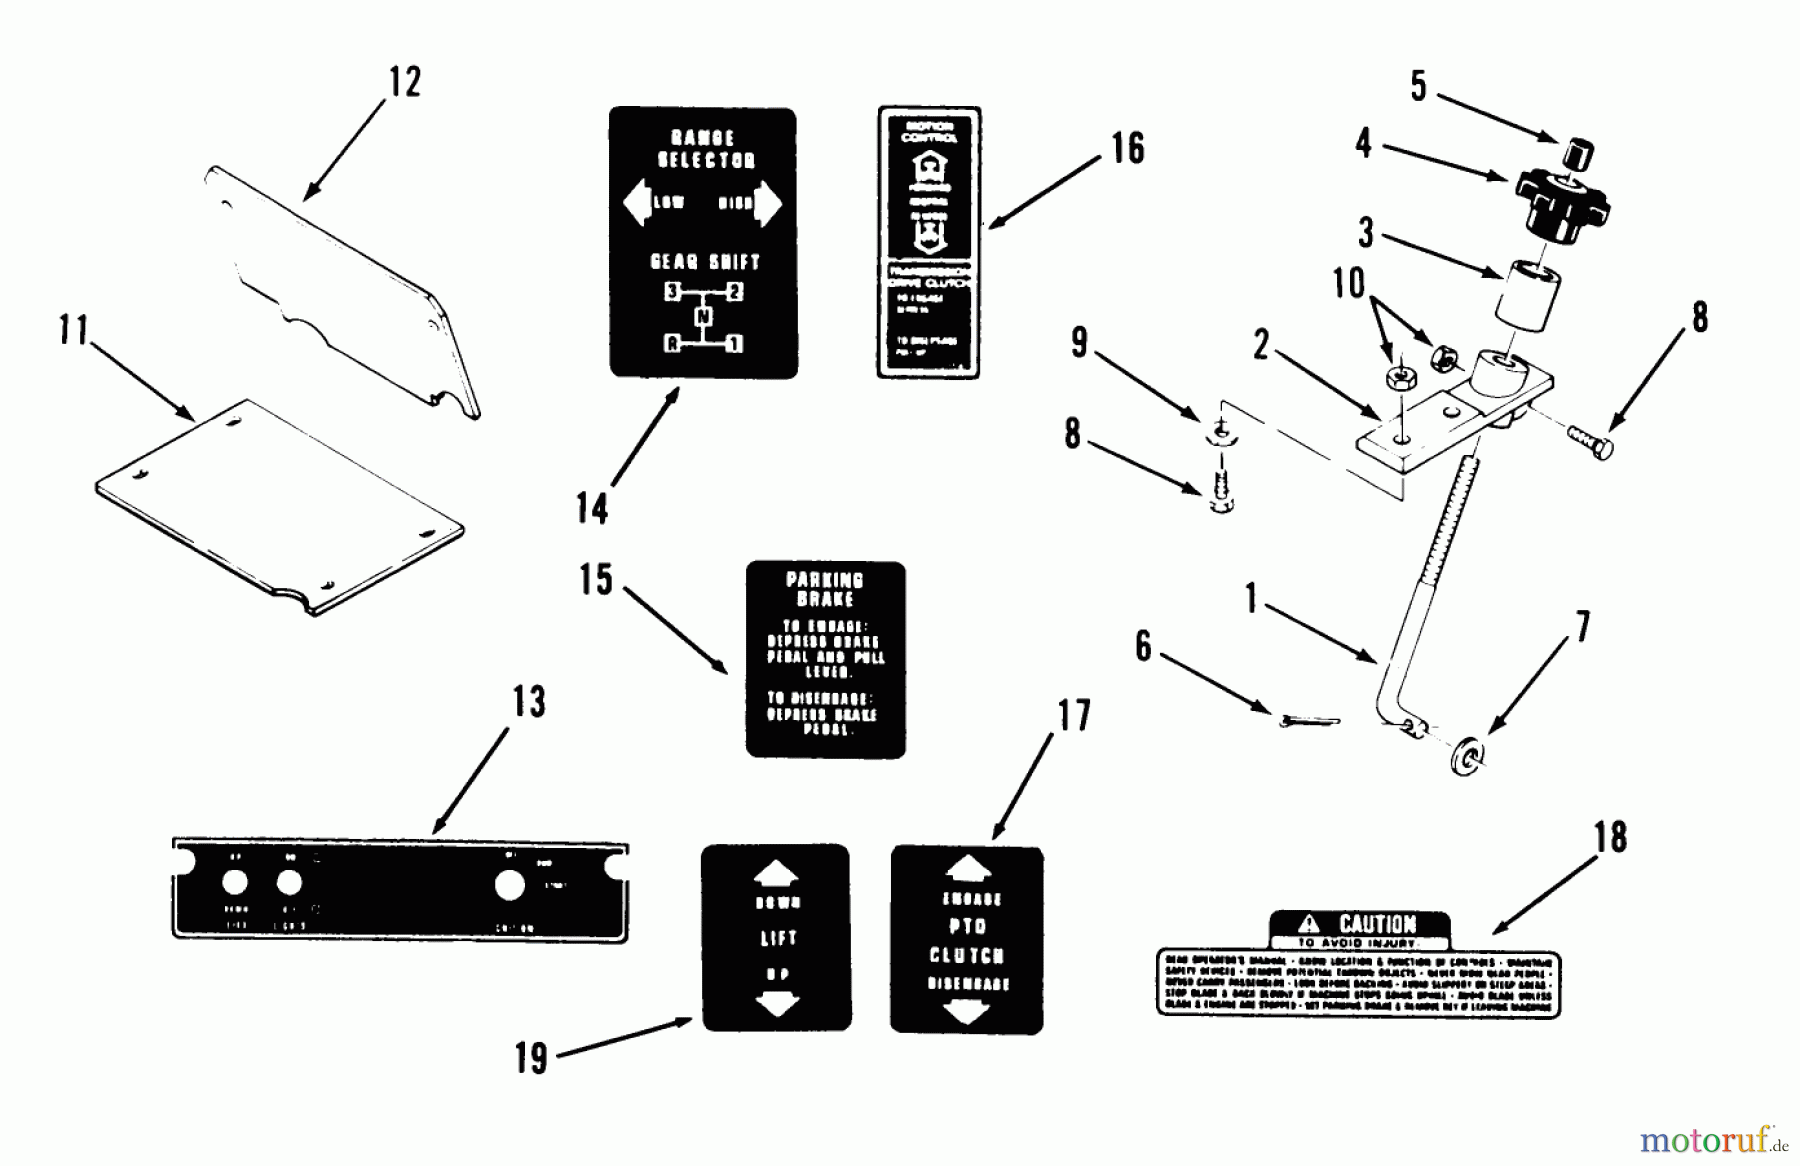  Toro Neu Accessories, Mower 86726 - Toro Dial-A-Hite, 1988 DIAL-A-HITE PARTS LIST FACTORY ORDER NO. 86726